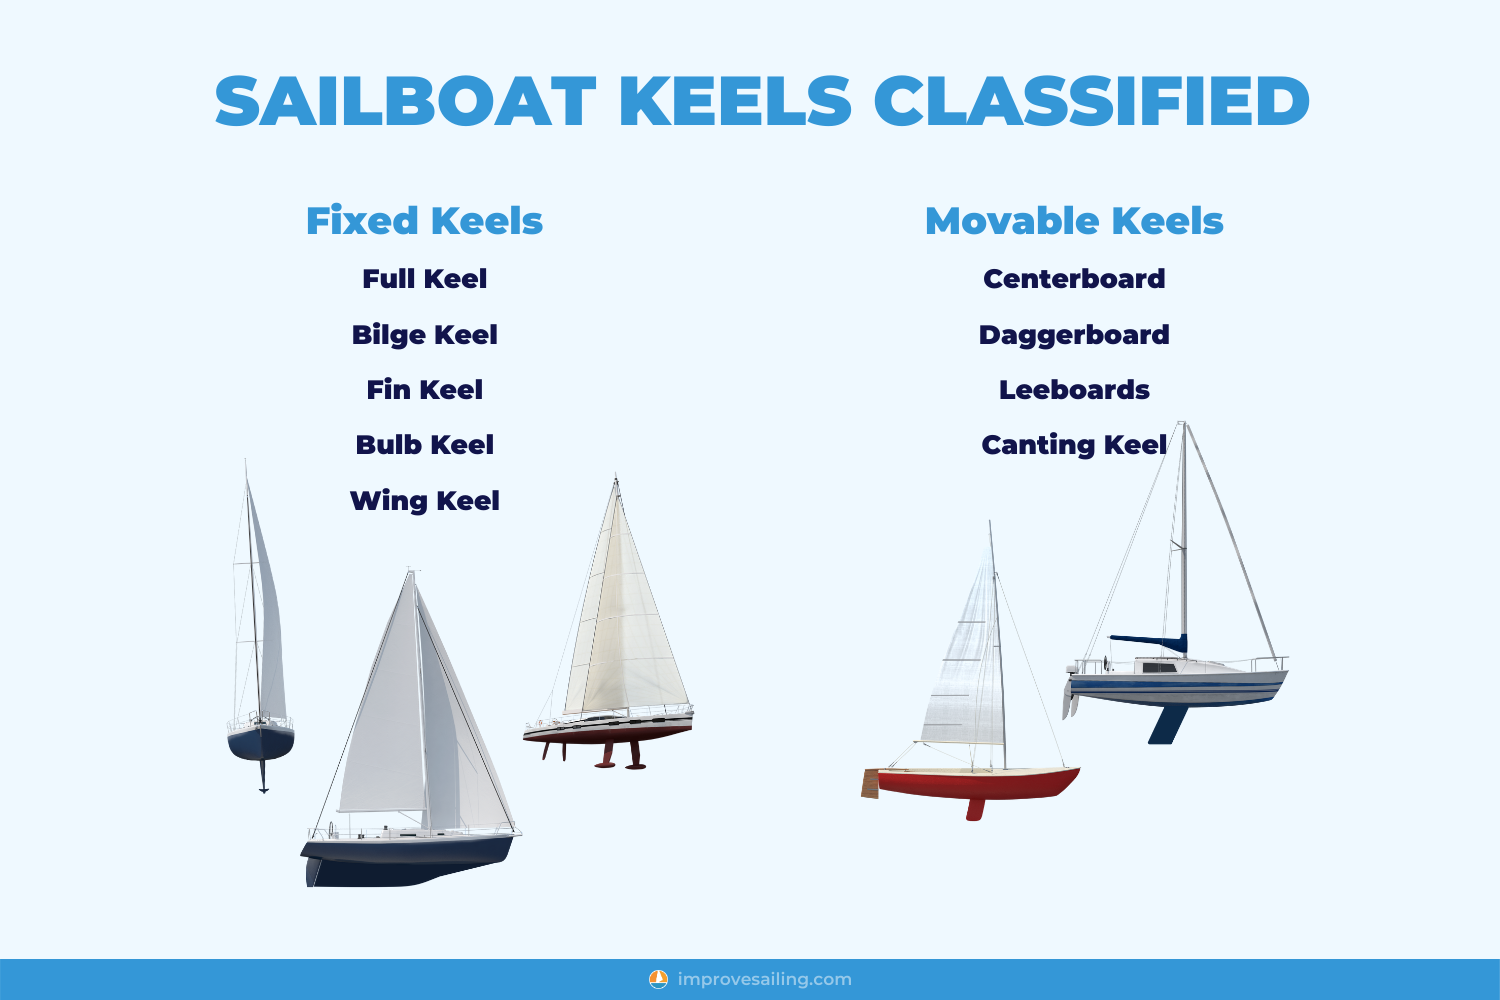 sailboat keel types classifications - Sailboat Keel Types: Illustrated Guide (Bilge, Fin, Full) | Coast Swimming